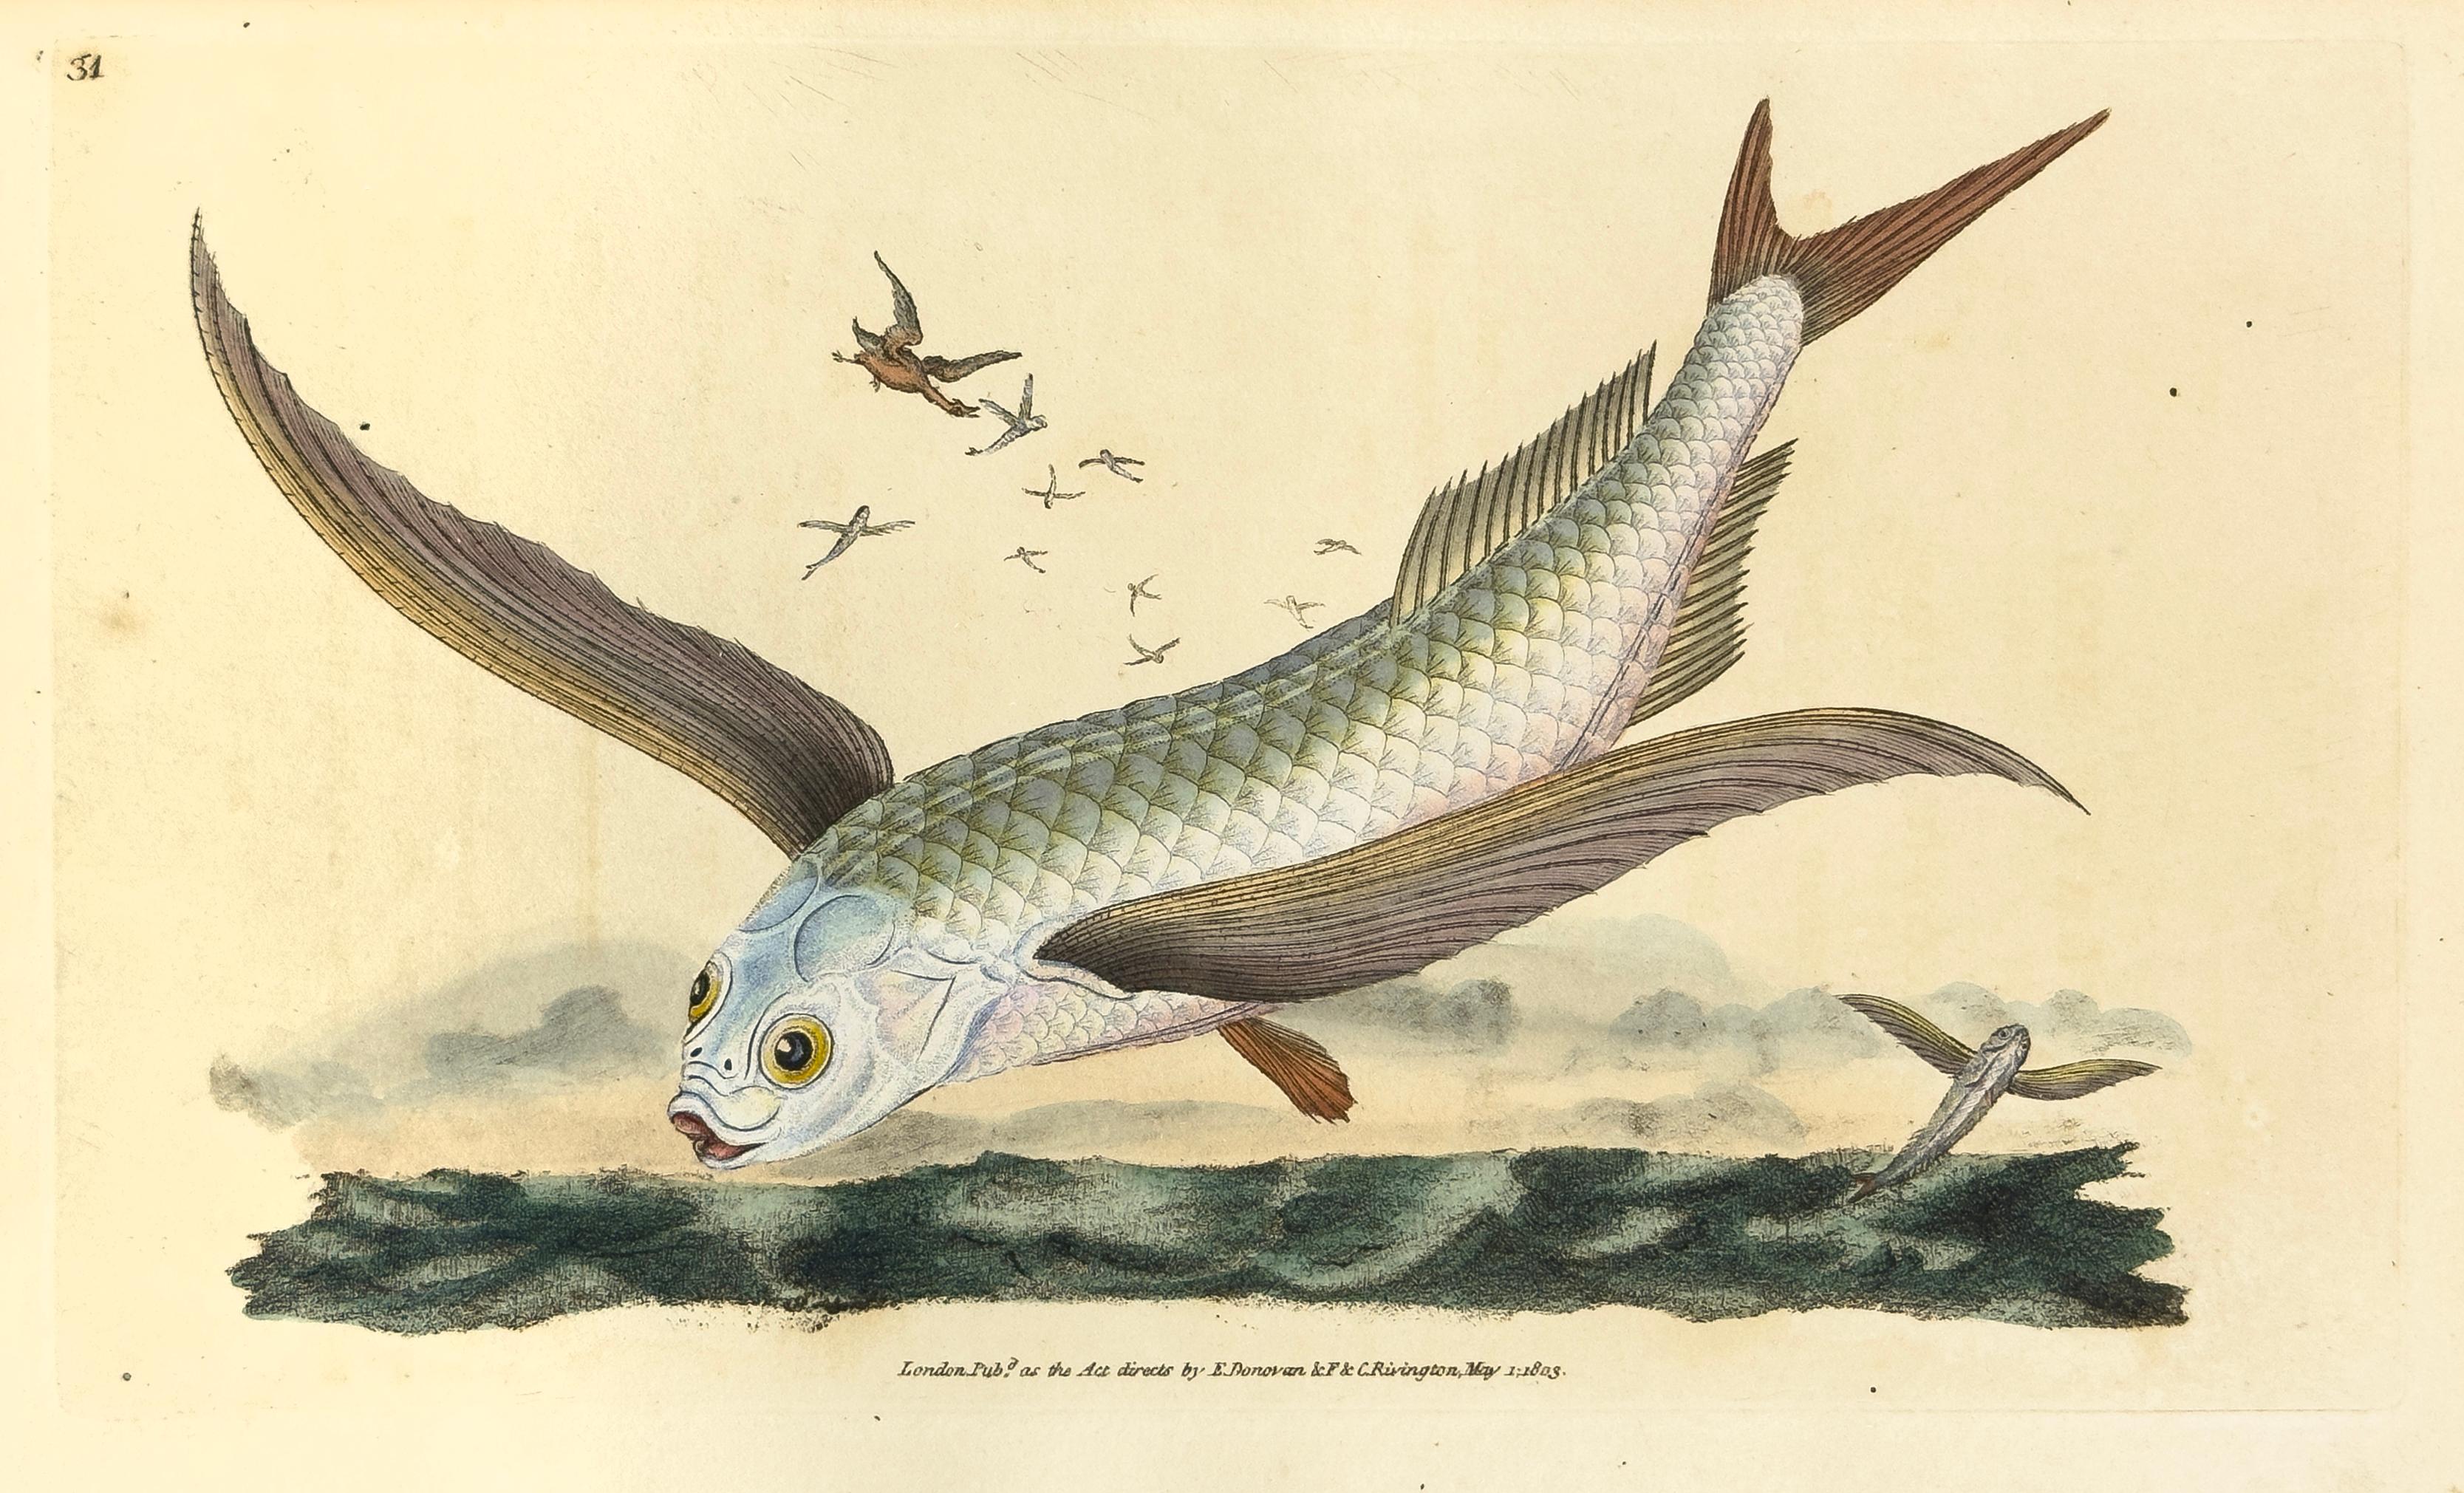 Animal Print Edward Donovan - 31 : Vénititans exocoetus, poissons volants communs